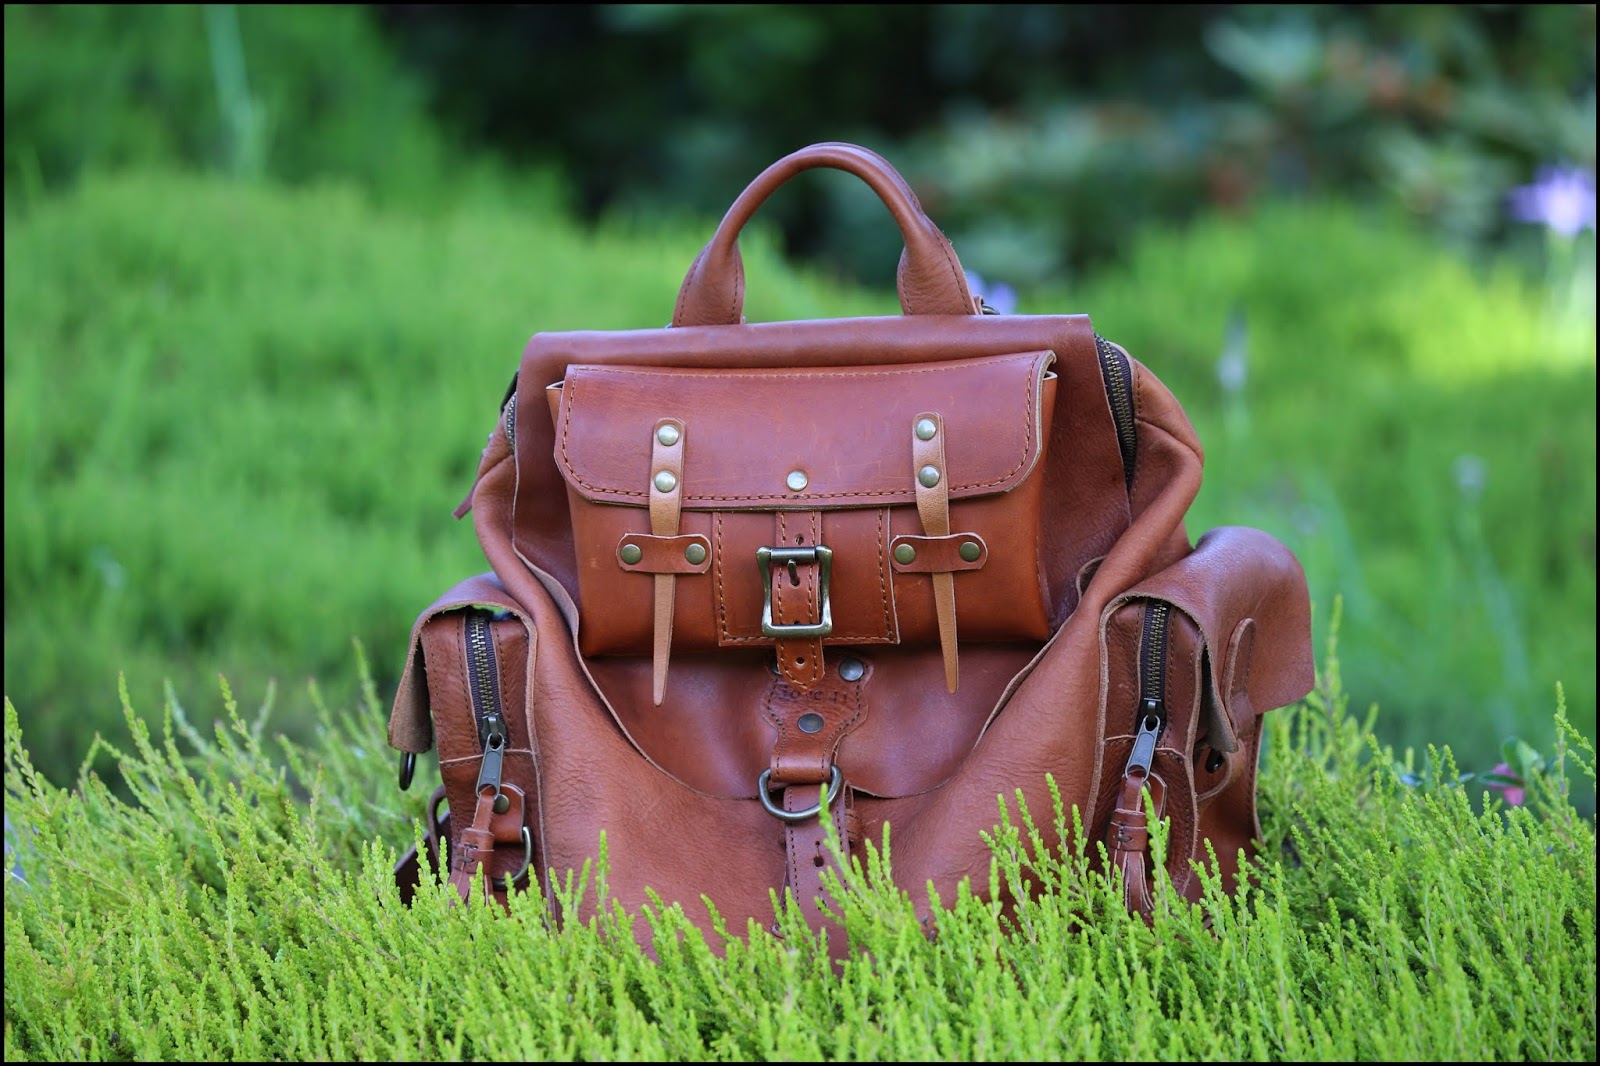 LeatherWerk: Love41 Wanderer’s Backpack with Lid Pocket